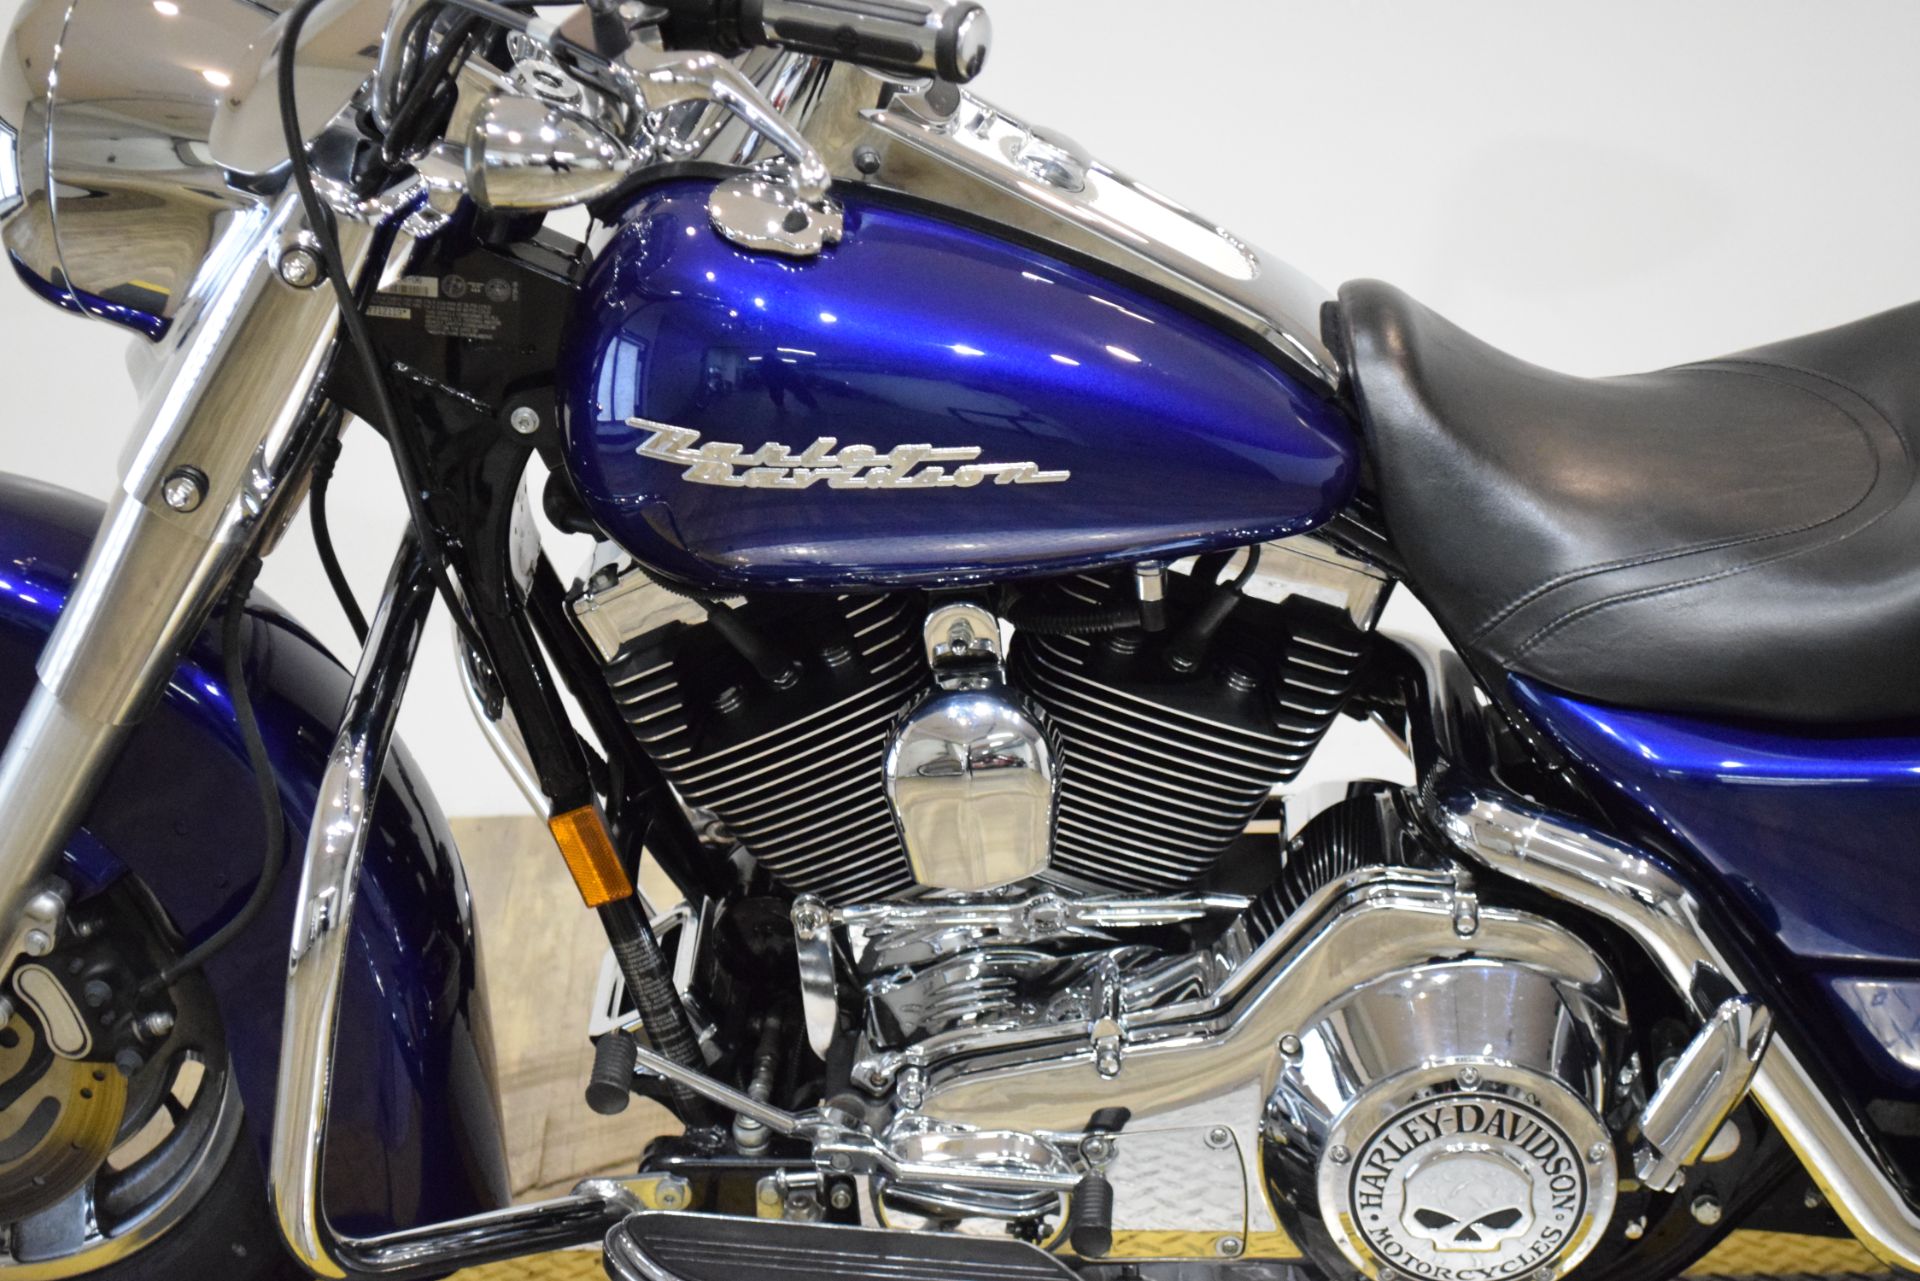 06 Harley Davidson Road King Custom Used Motorcycle For Sale Wauconda Illinois